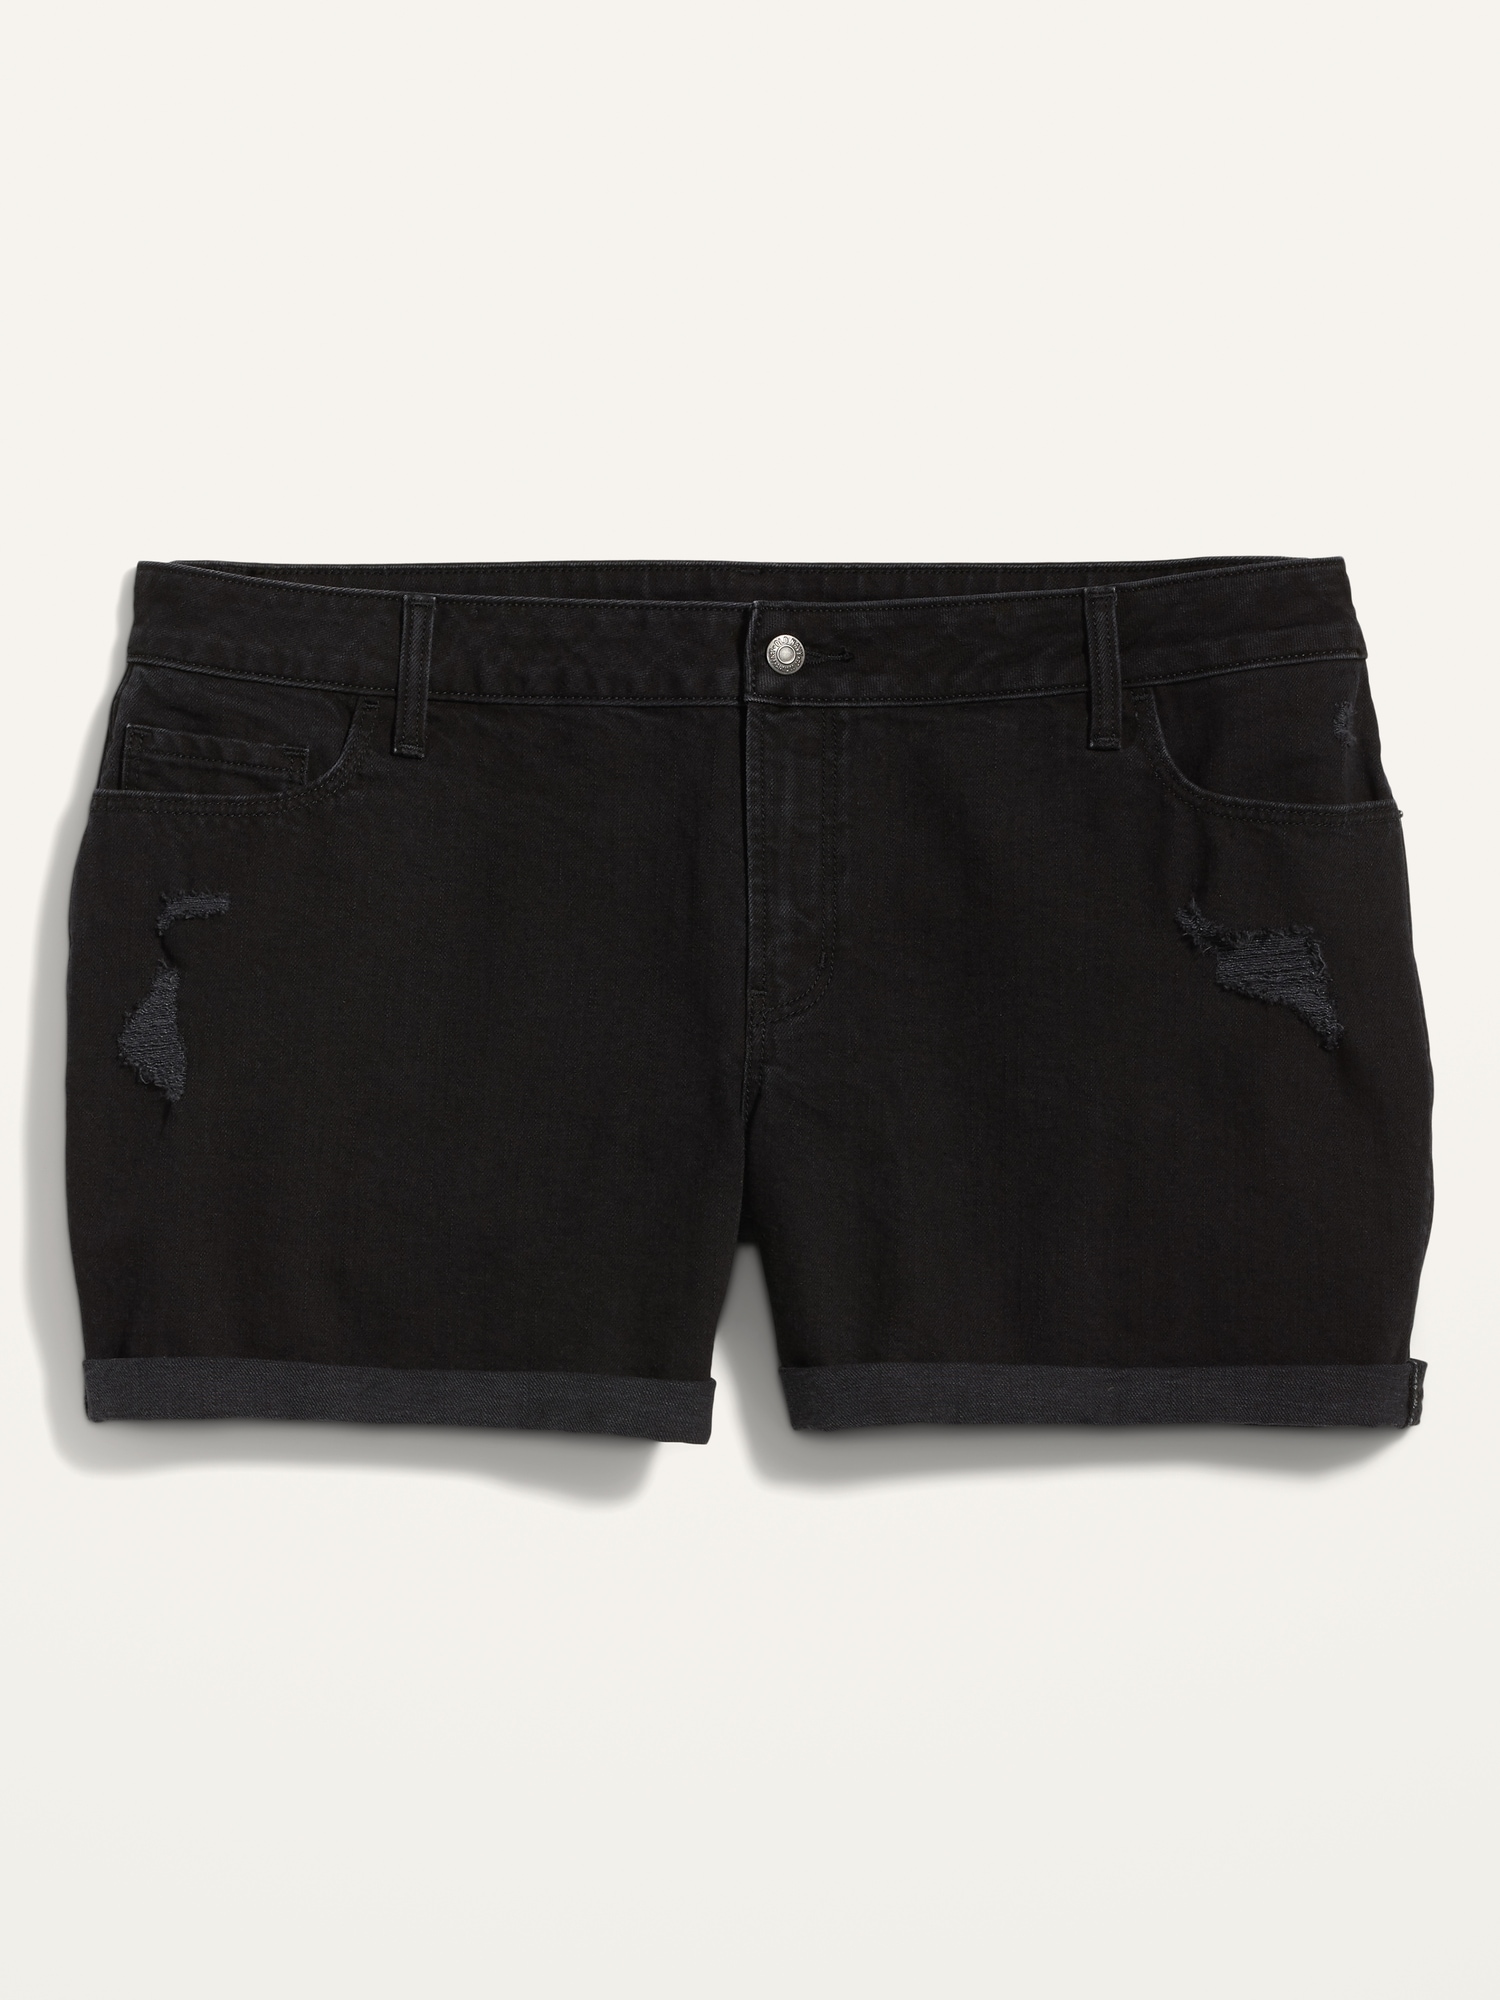 Denim Shorts, Jean Shorts, Black, Plus Size